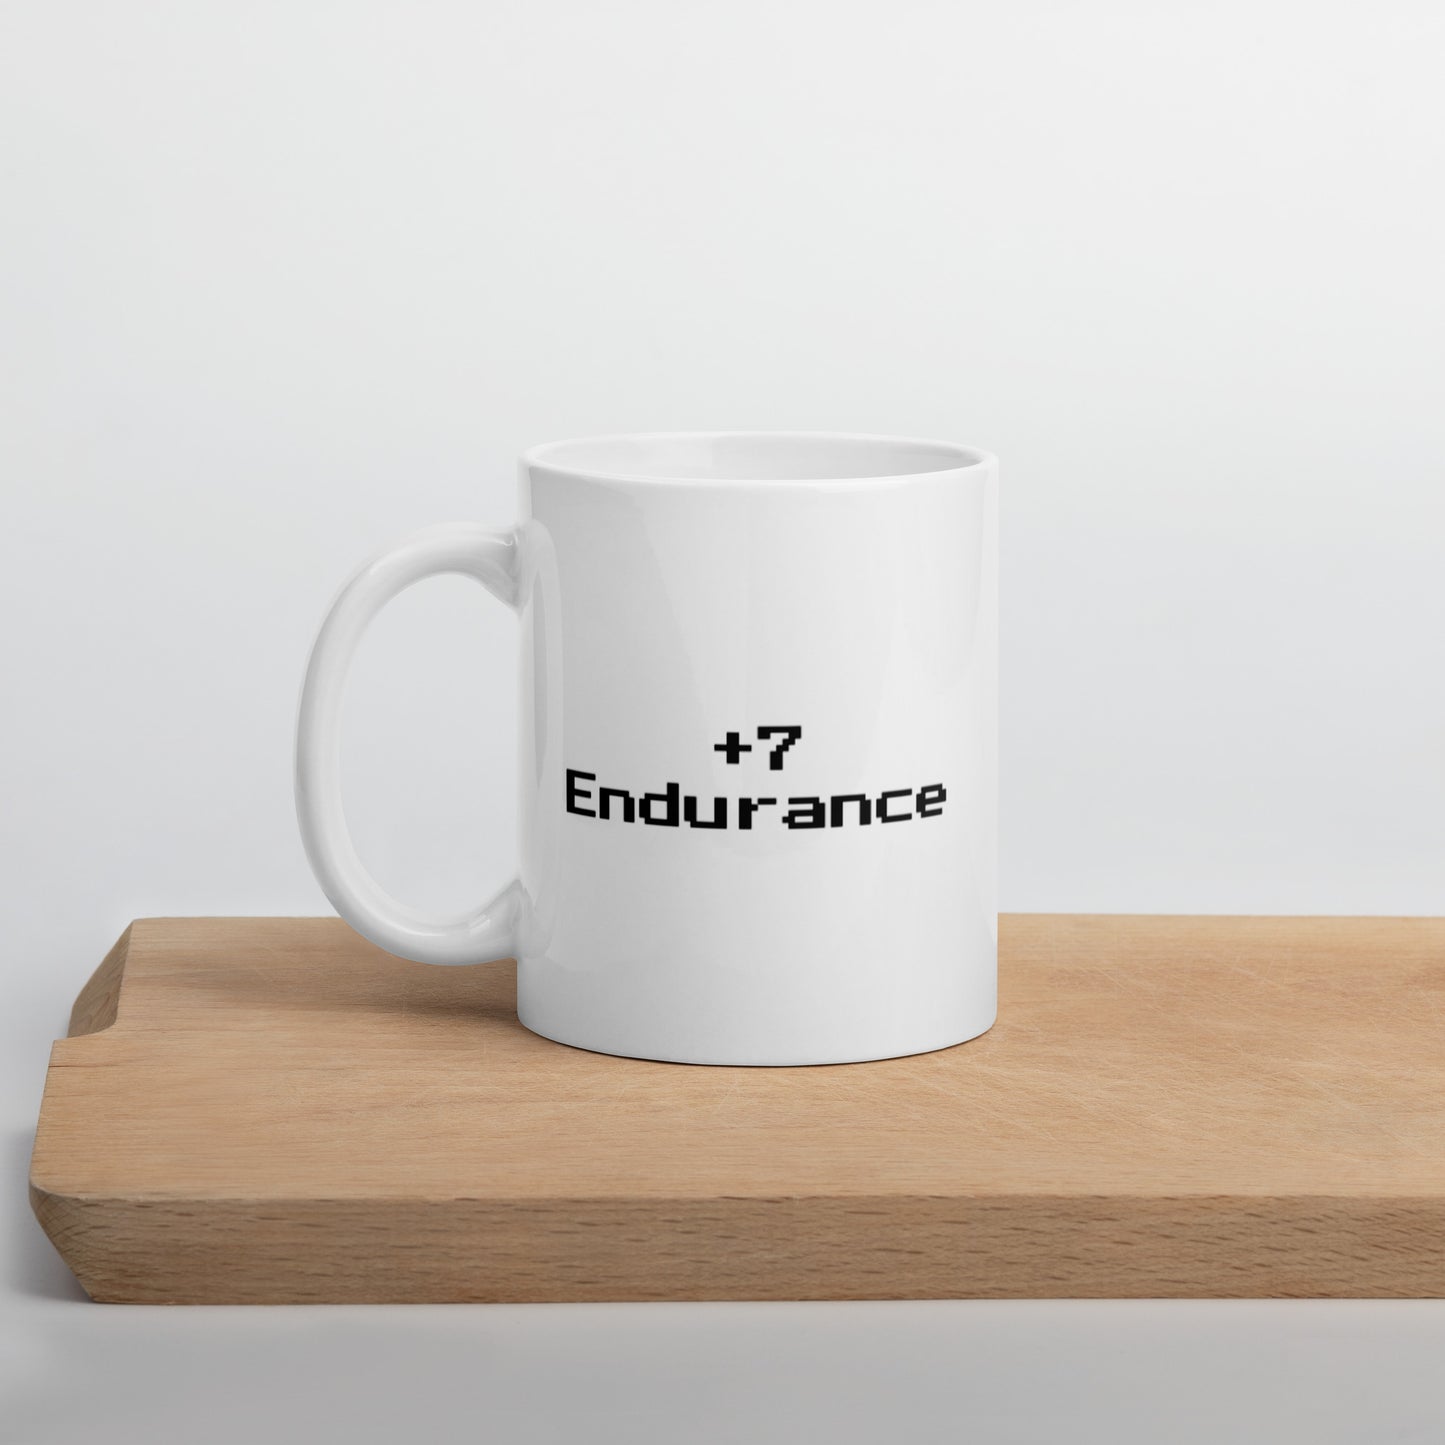 +7 endurance - Mug